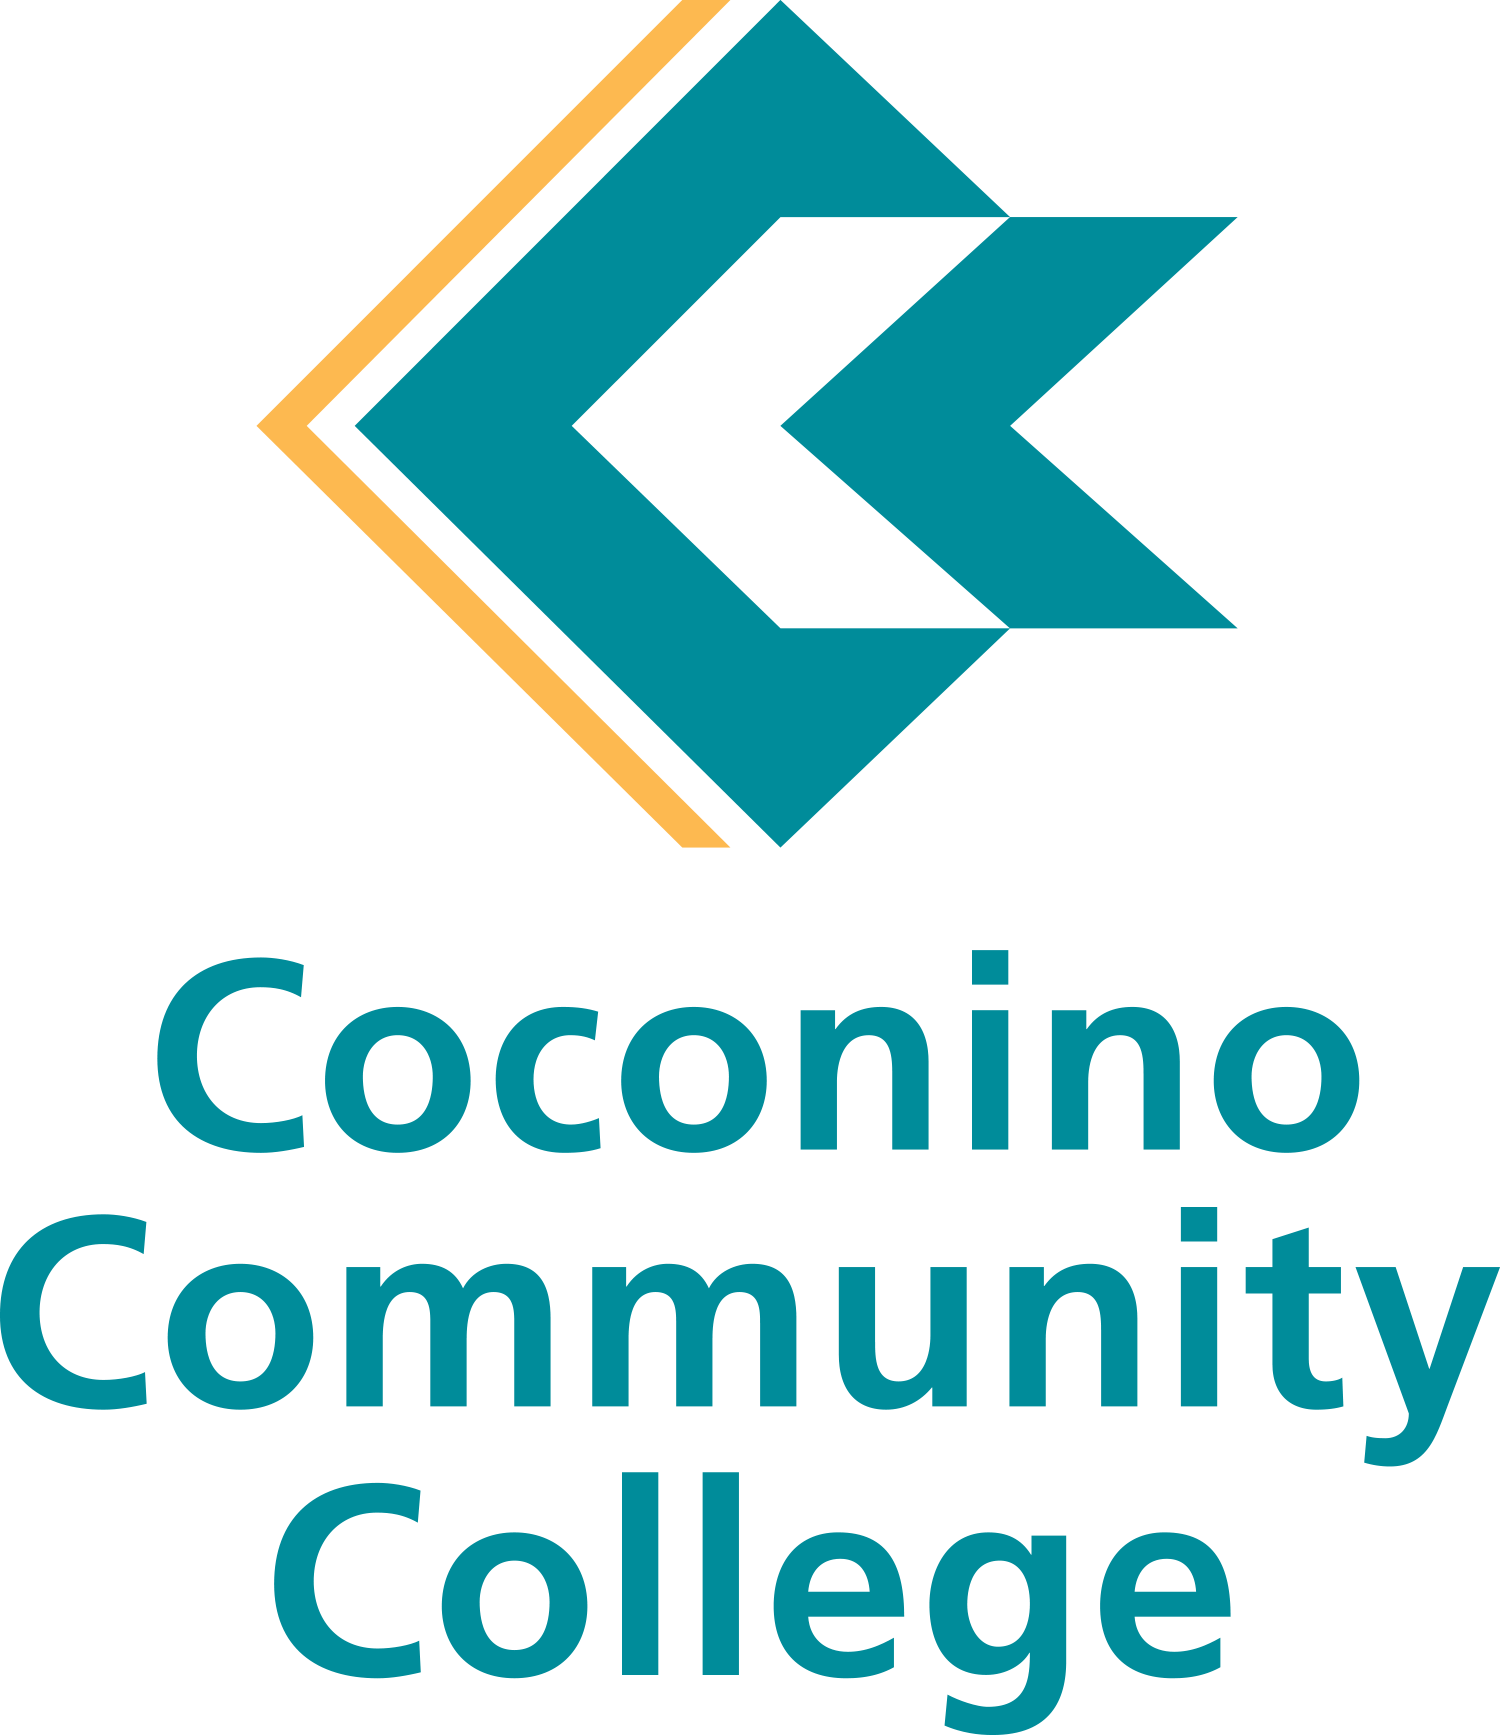 Ccc Logo